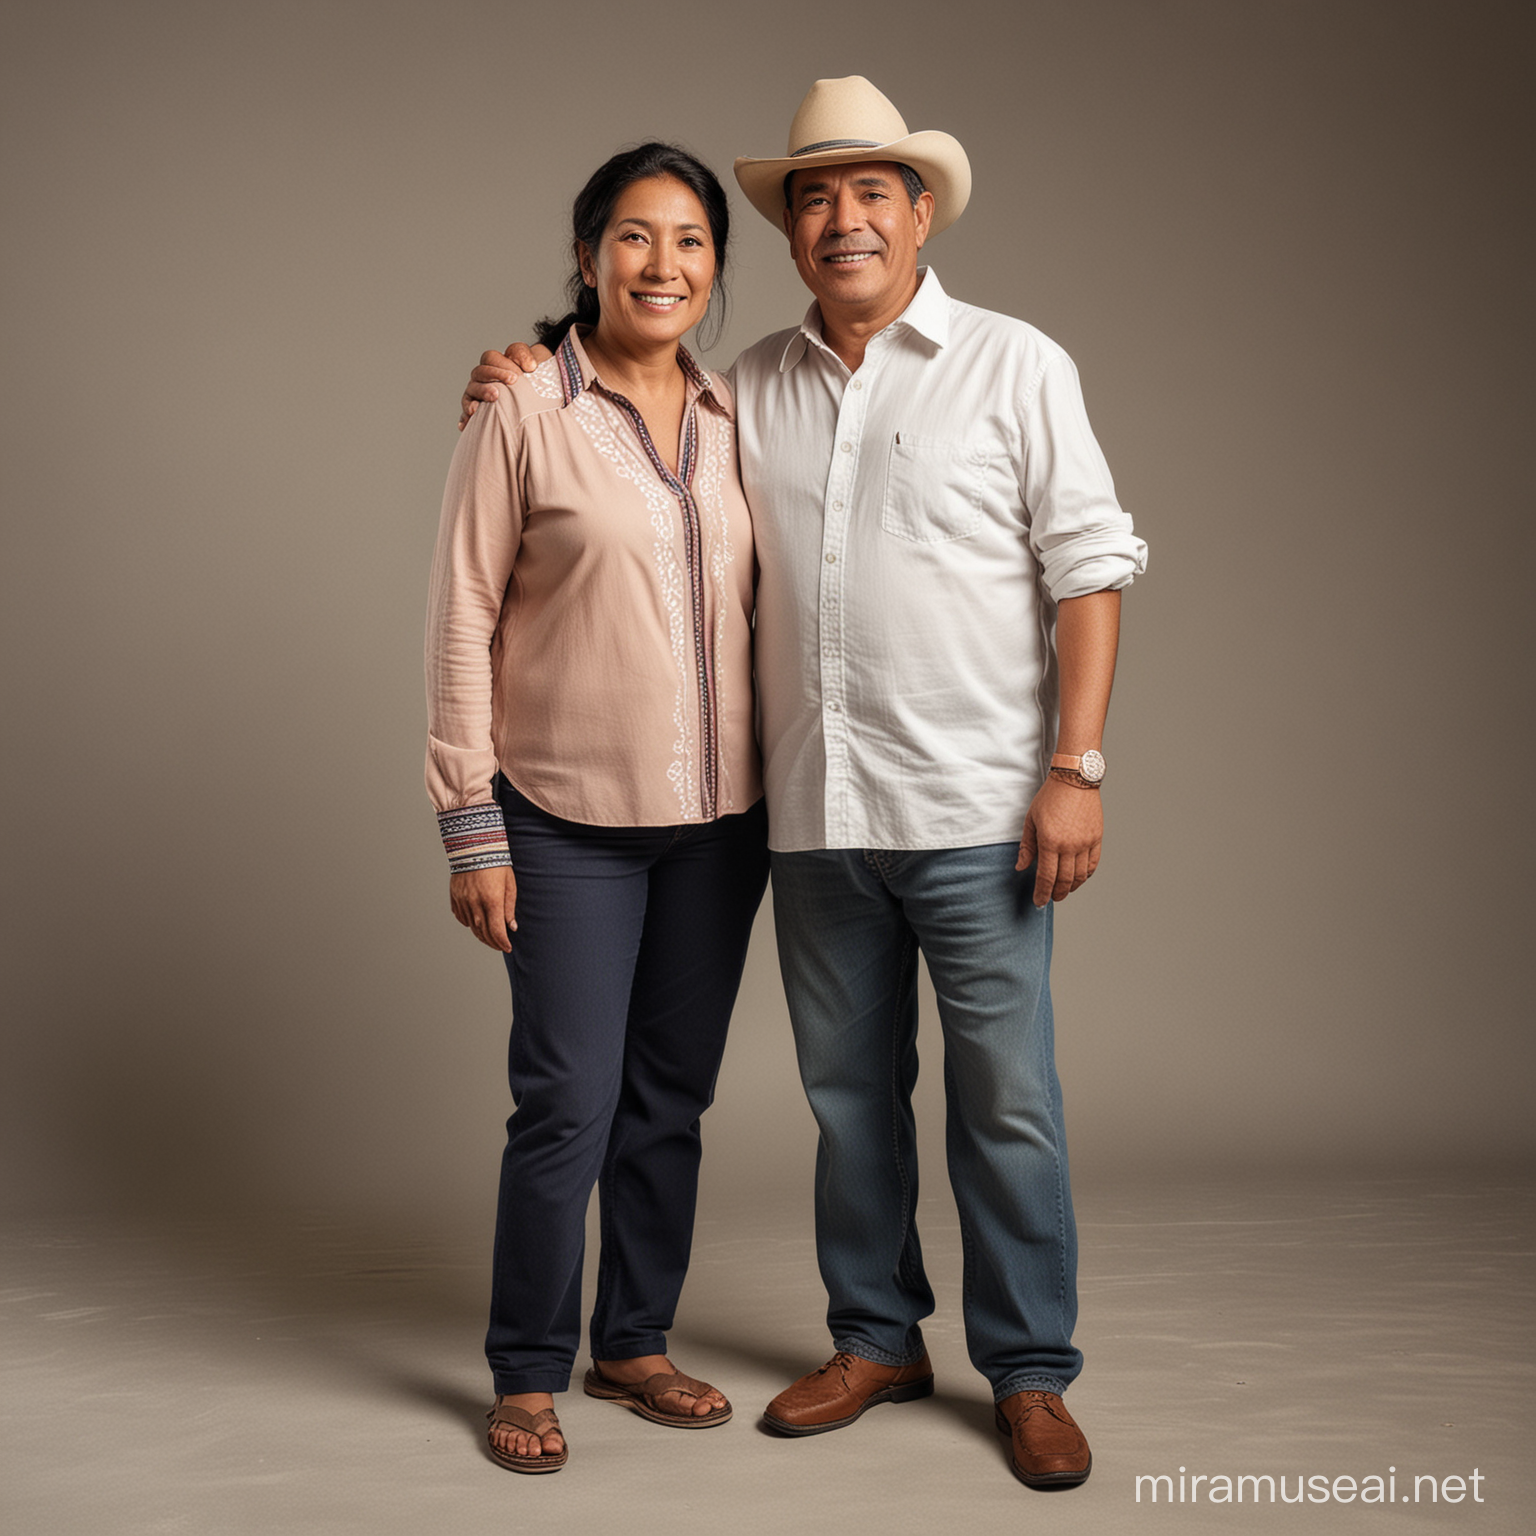 Middleaged Peruvian Couple in Traditional Attire